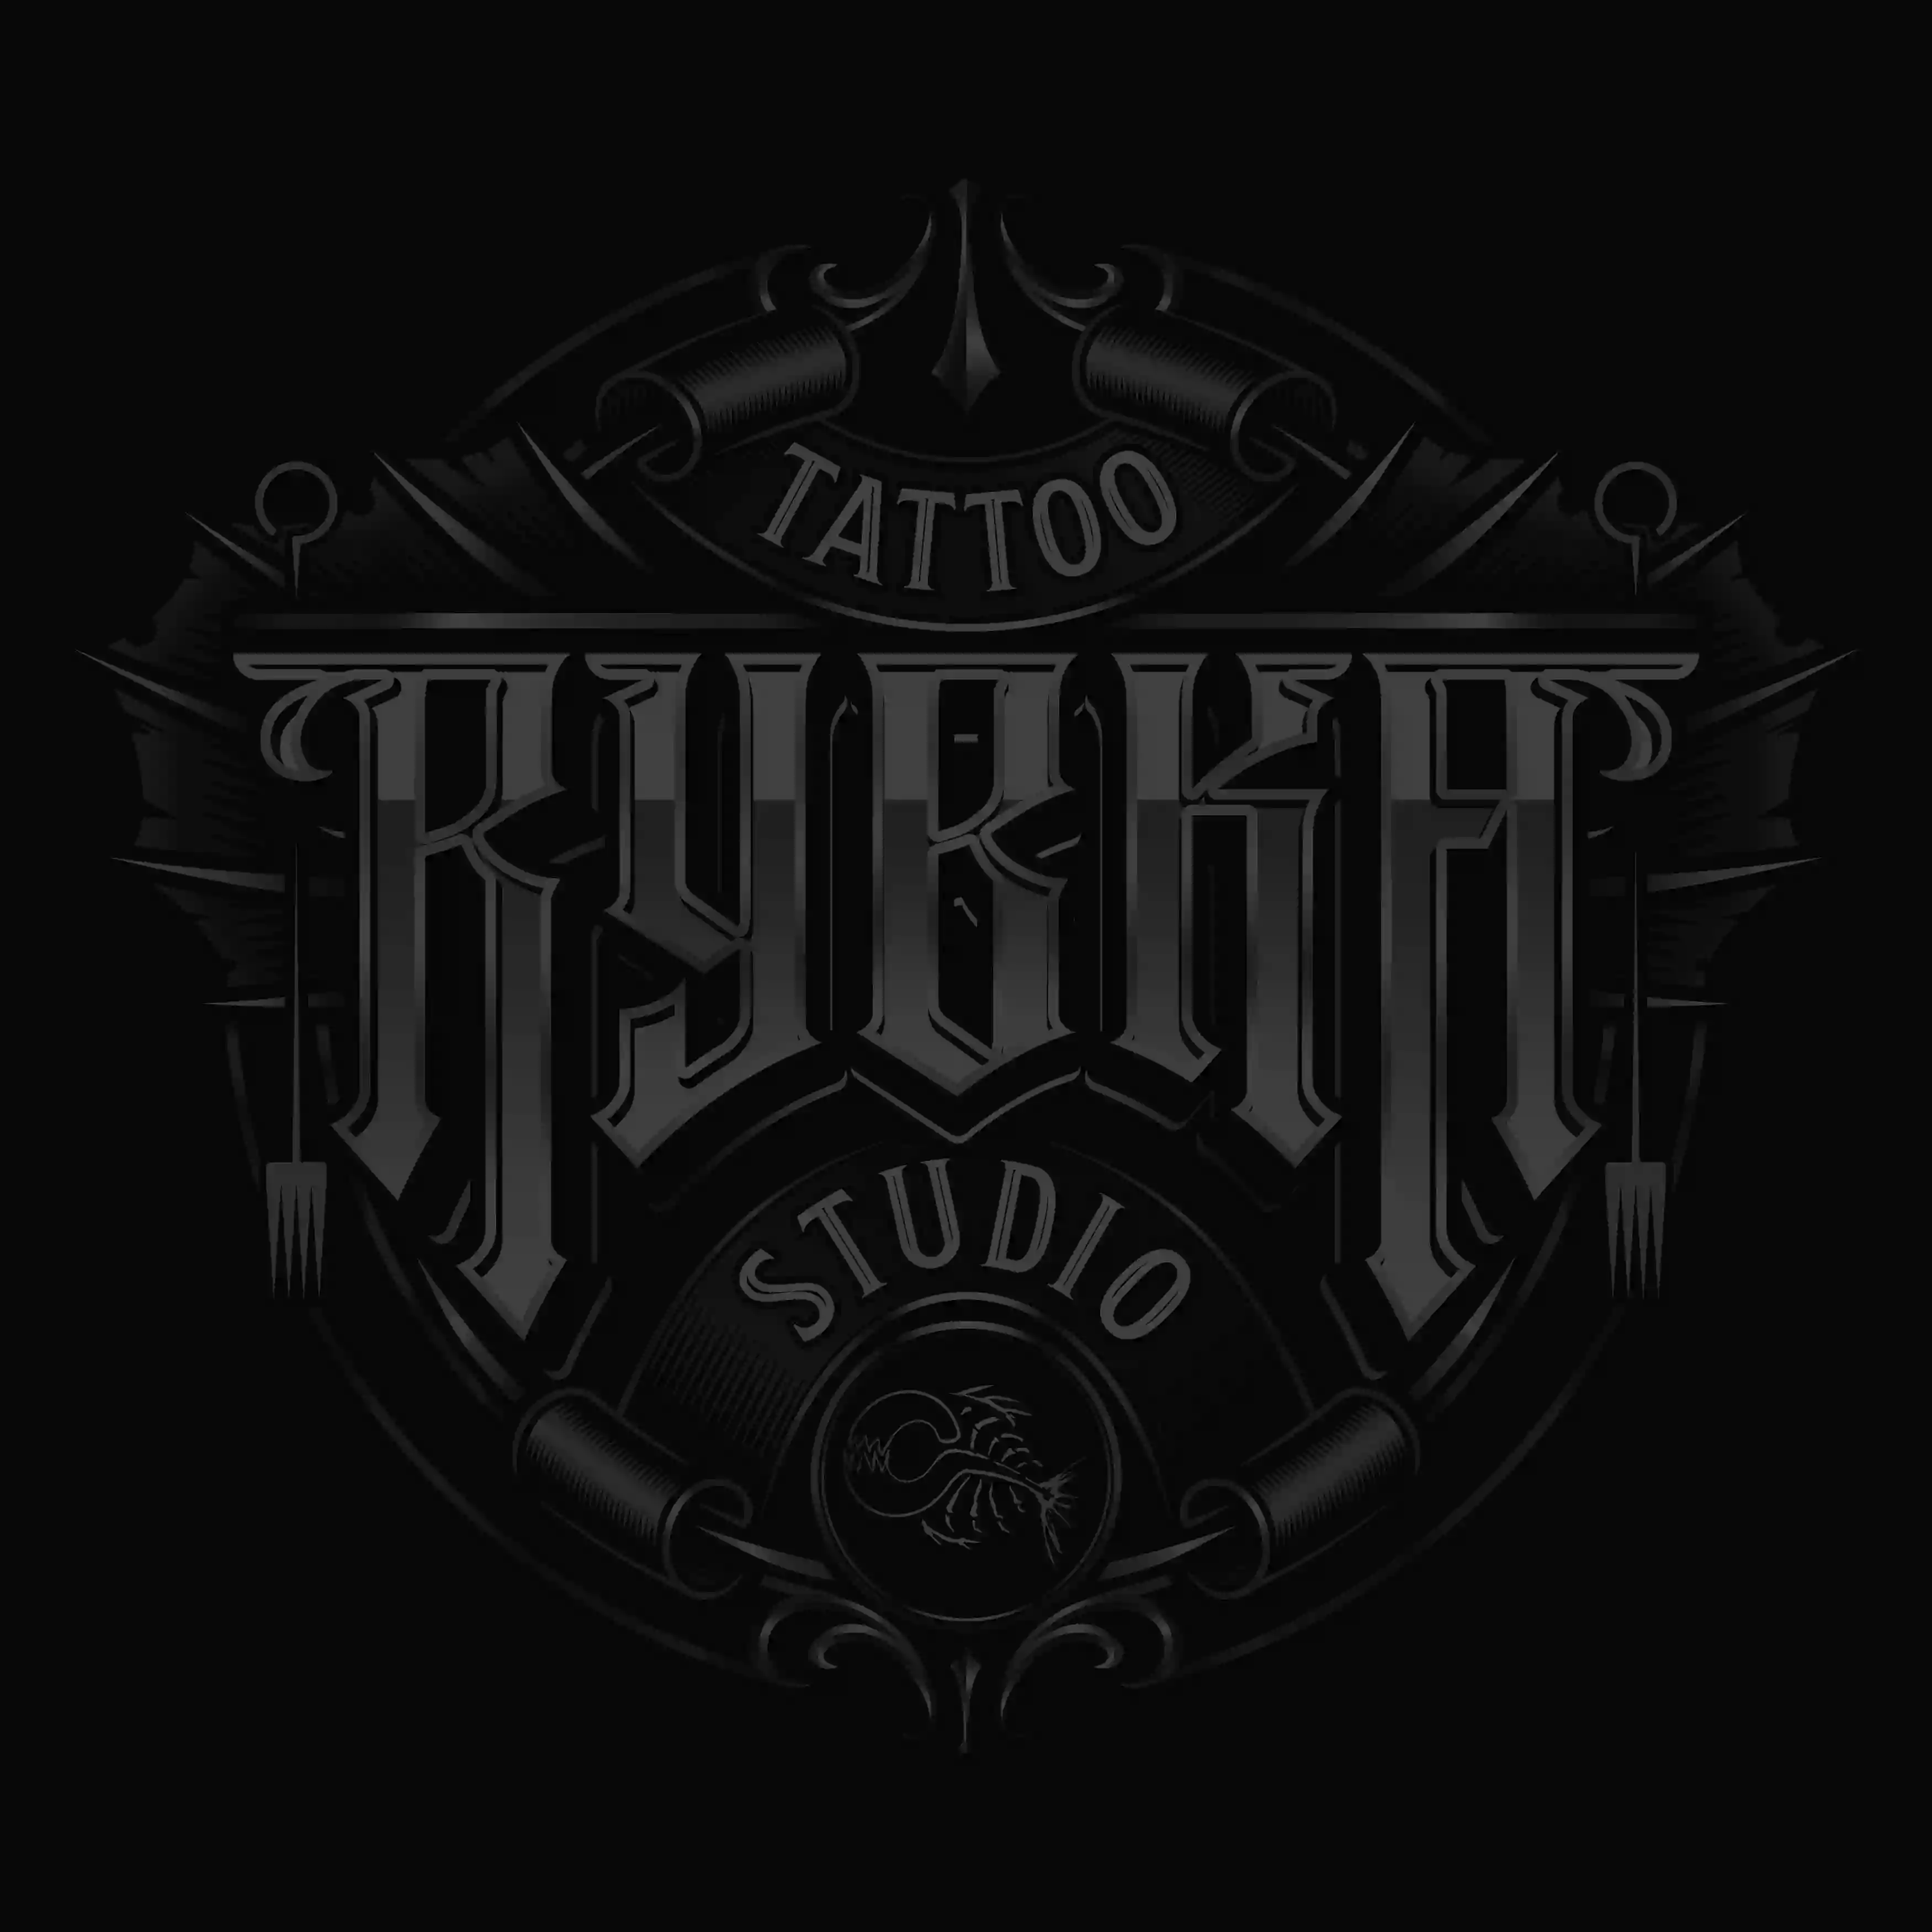 Rybka Tattoo Studio